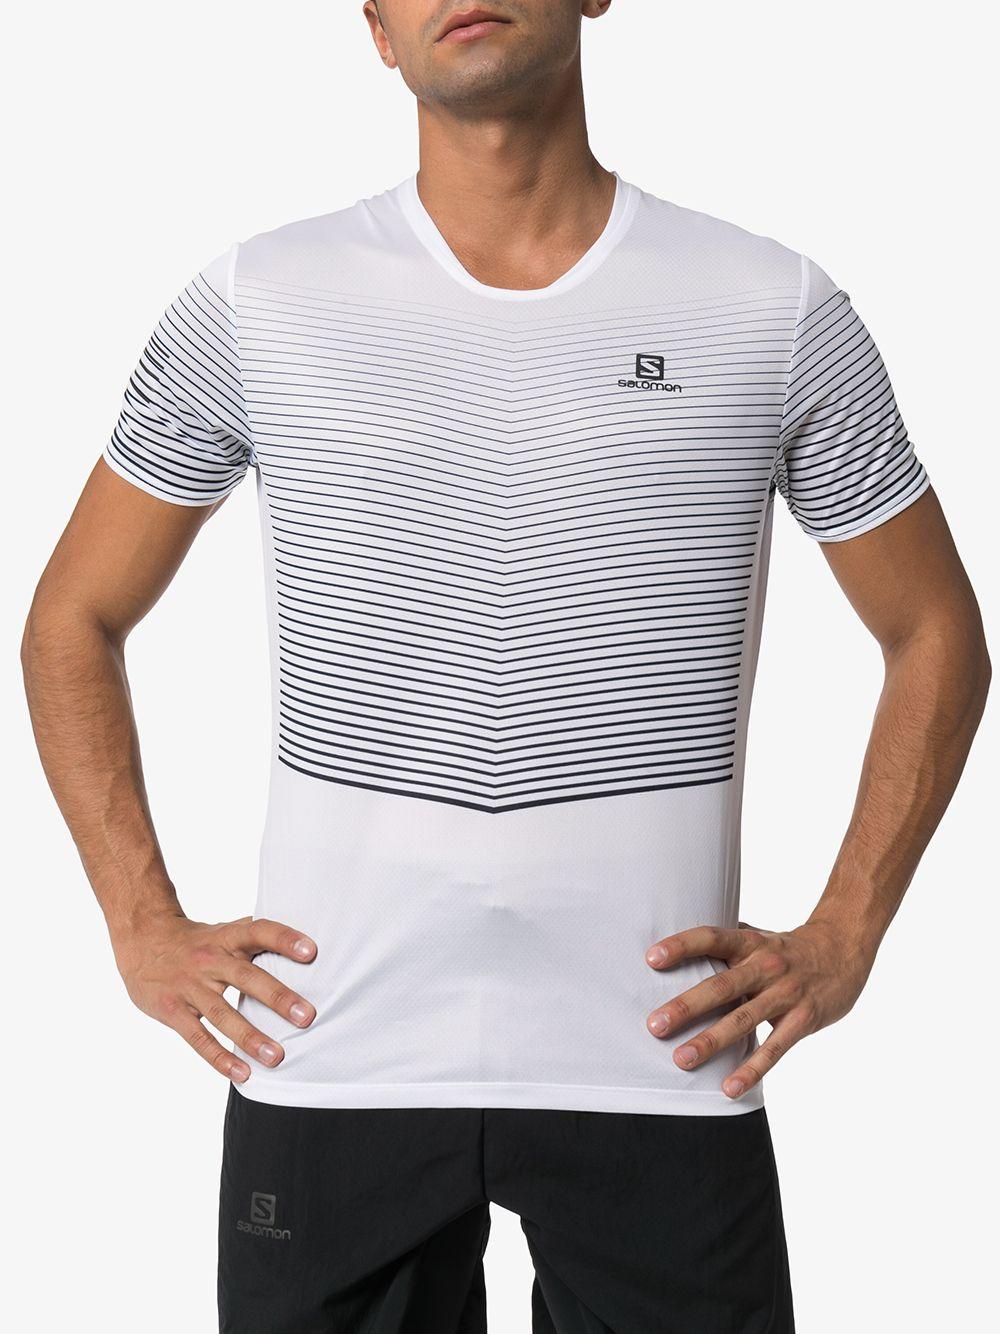 Salomon S/LAB Sense Striped Logo Print T-shirt in White for Men - Lyst